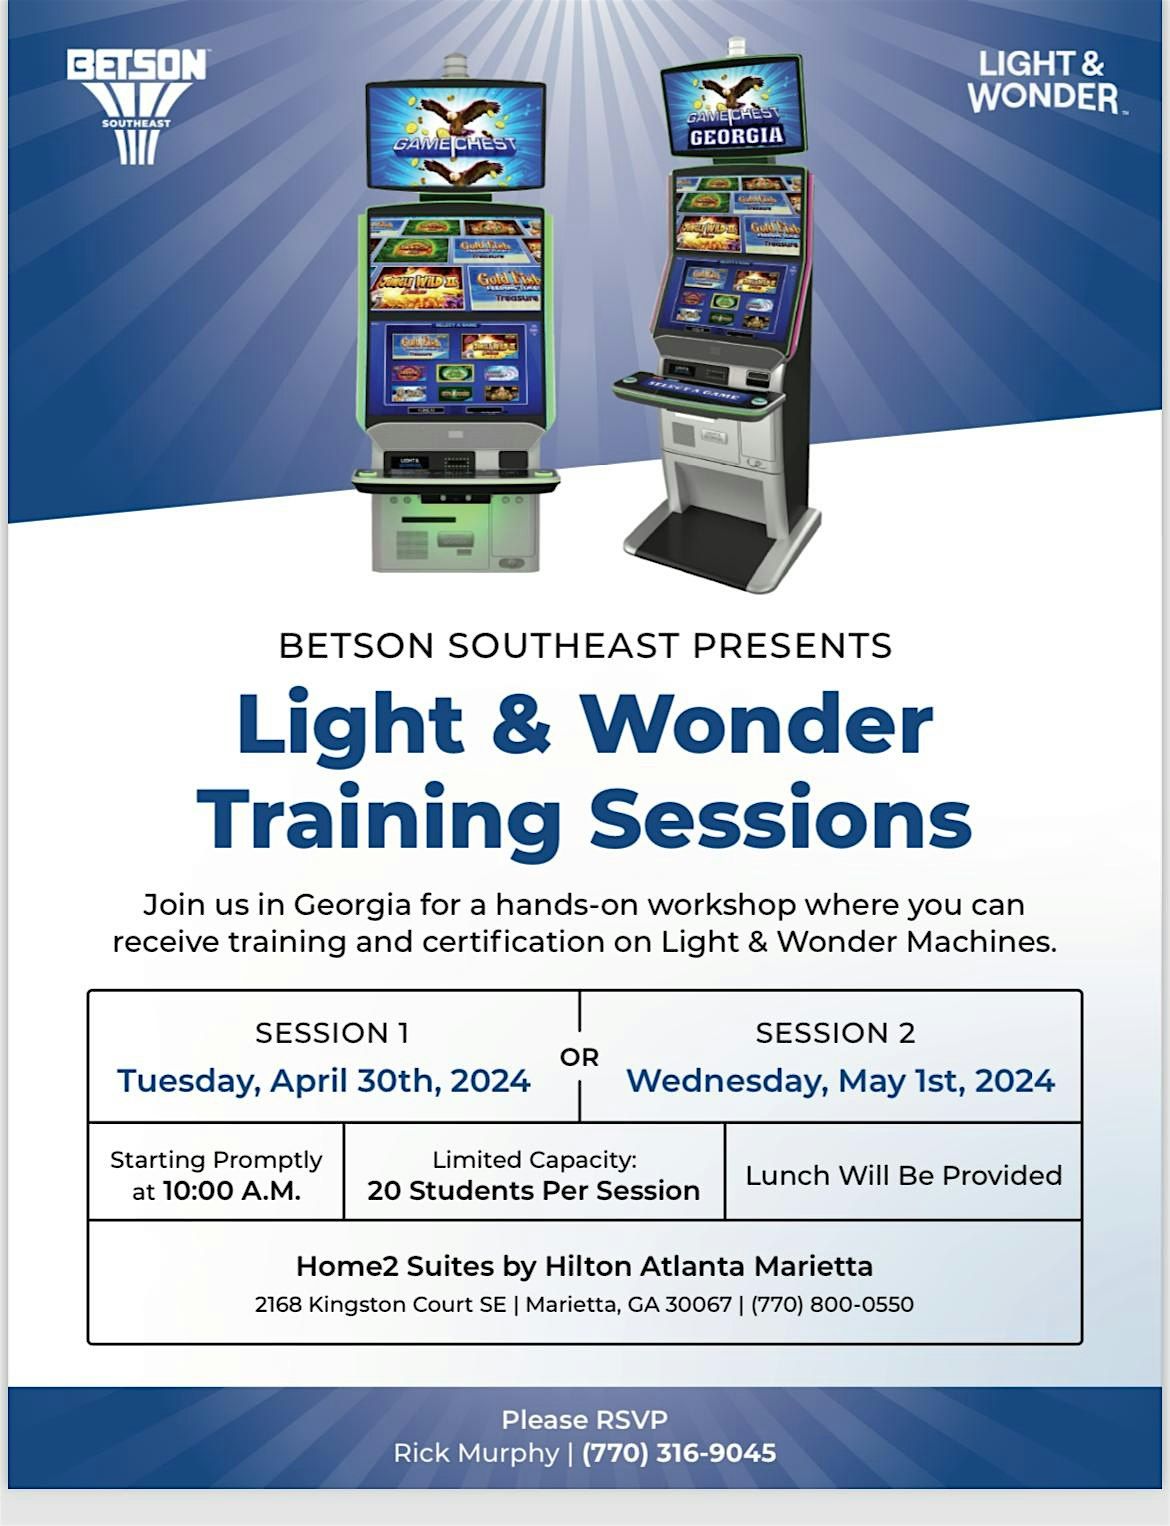 Betson Southeast Presents Light & Wonder Training